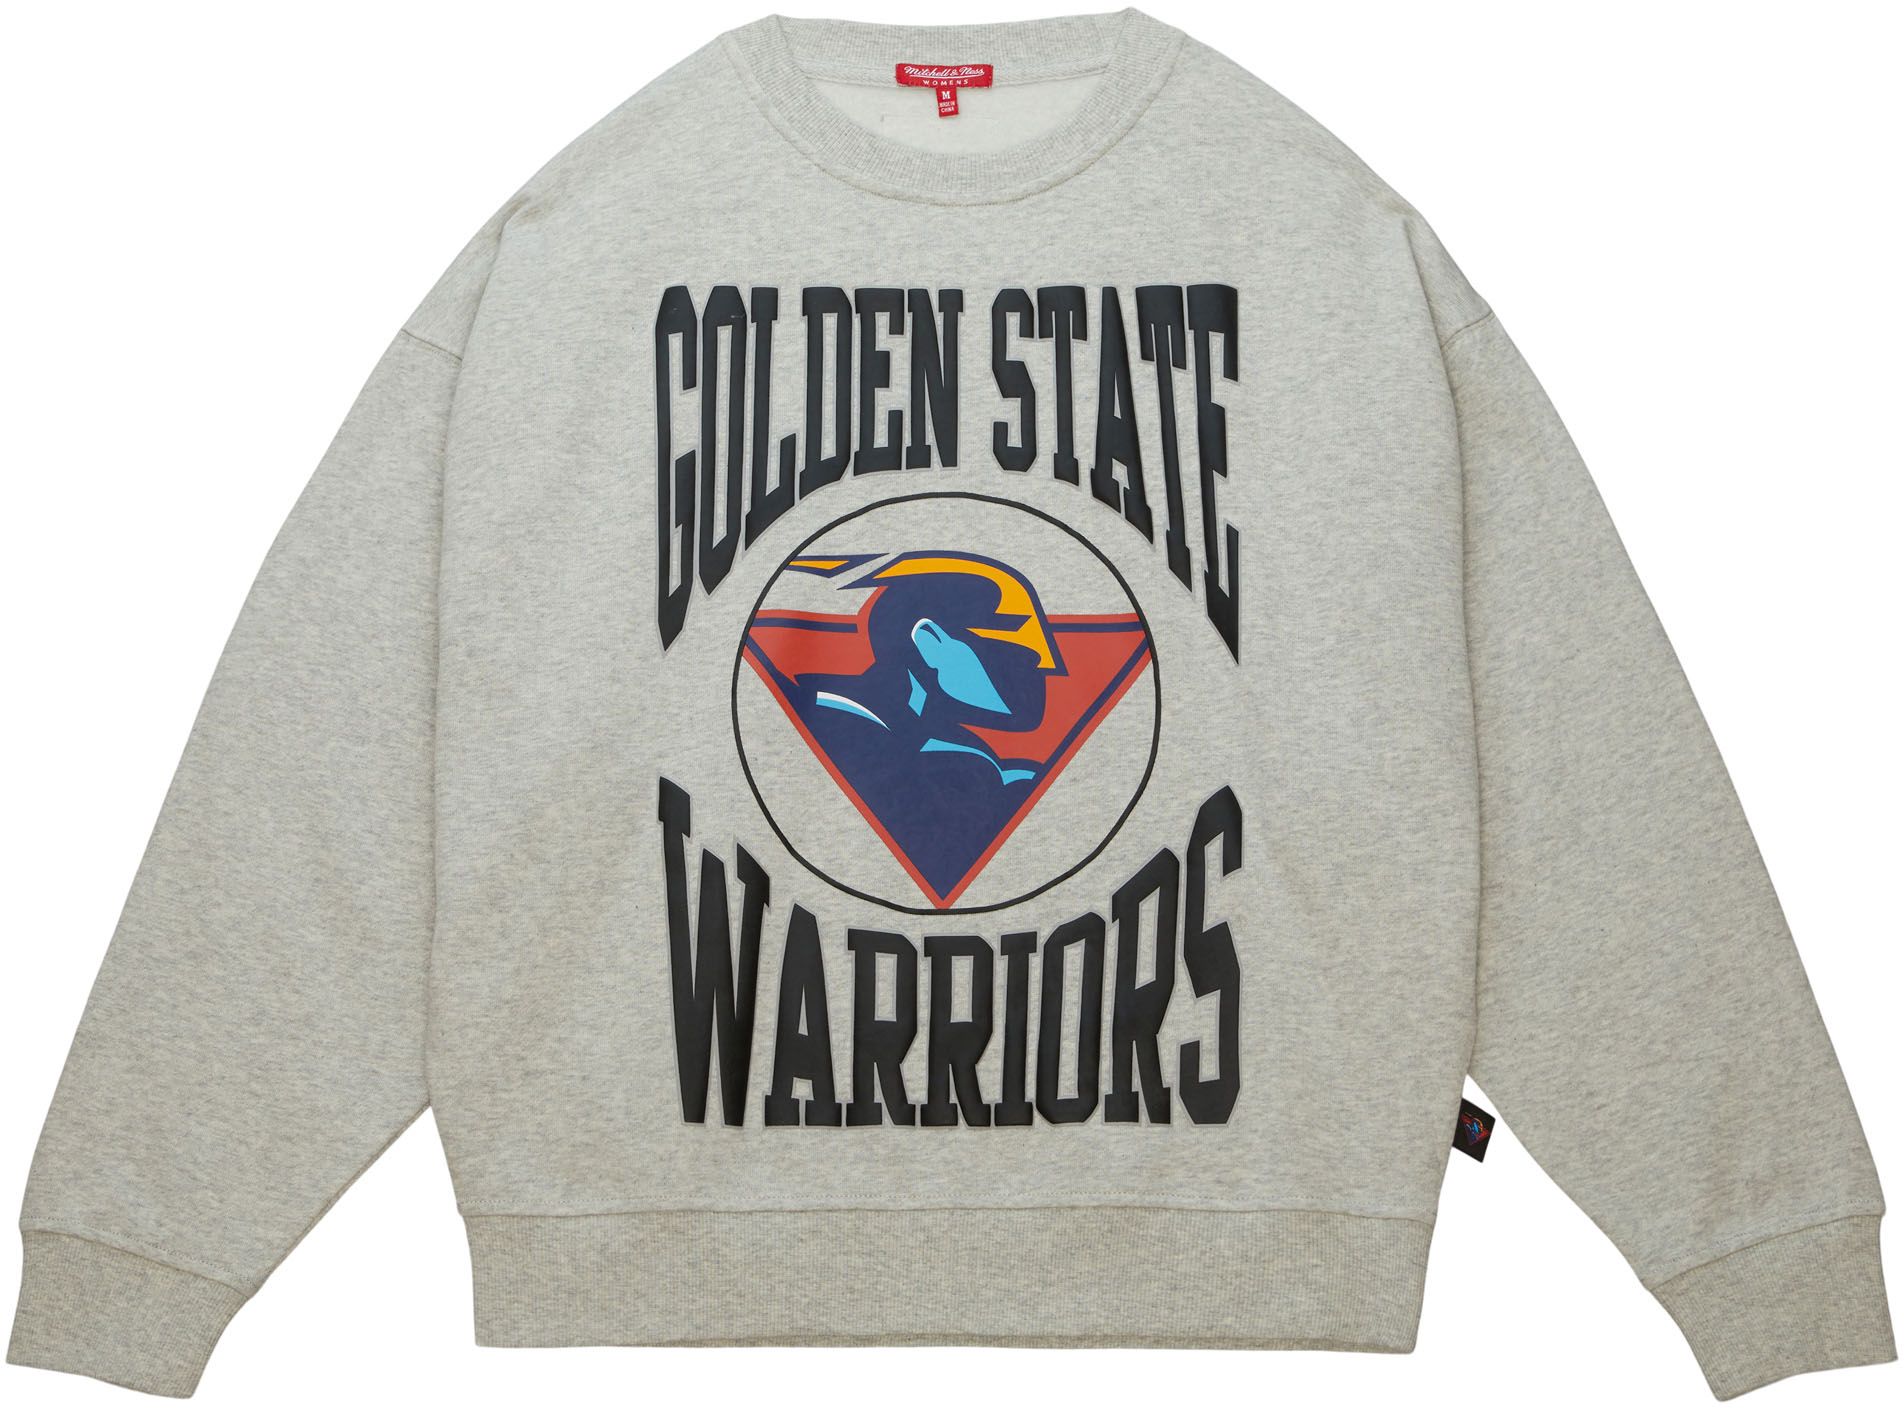 Dick's Sporting Goods NBA Men's Golden State Warriors Royal Hometown T-Shirt